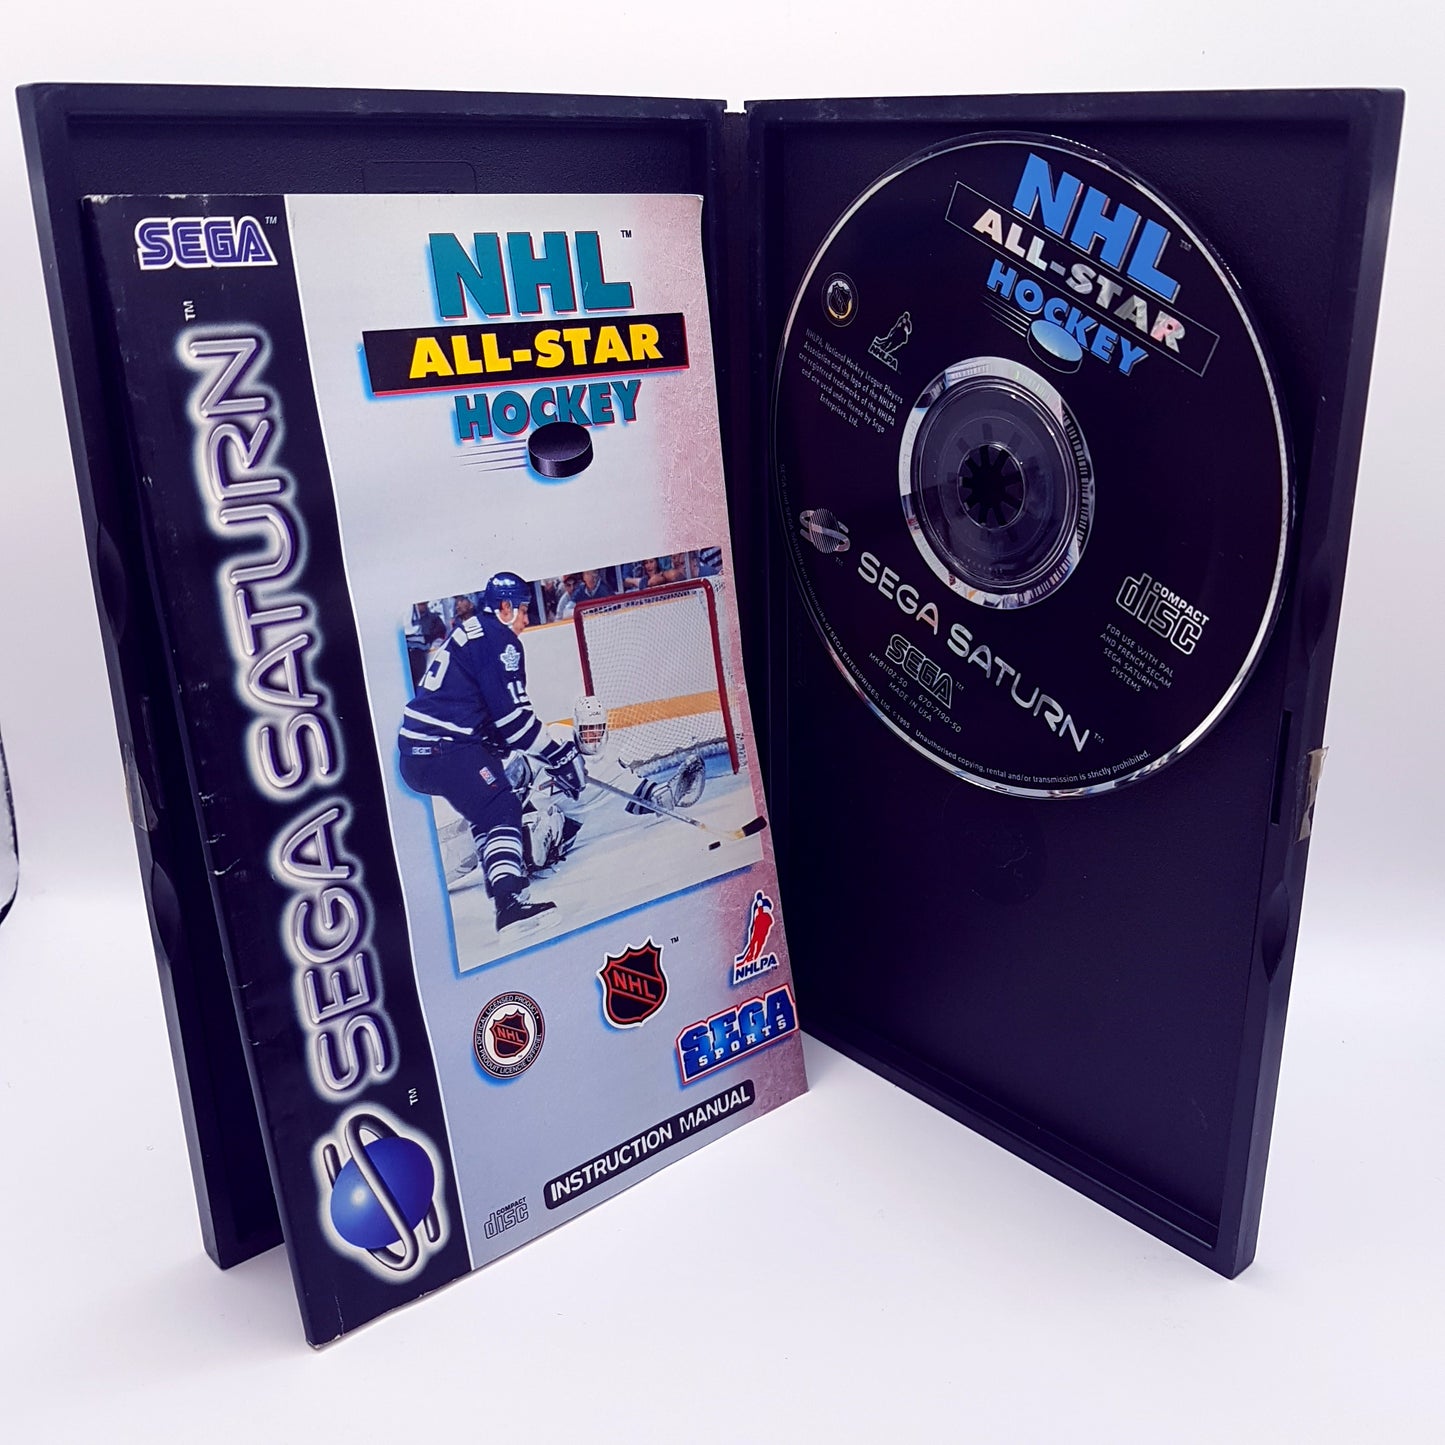 SEGA Saturn - NHL All-Star Hockey - komplett mit OVP - gebraucht